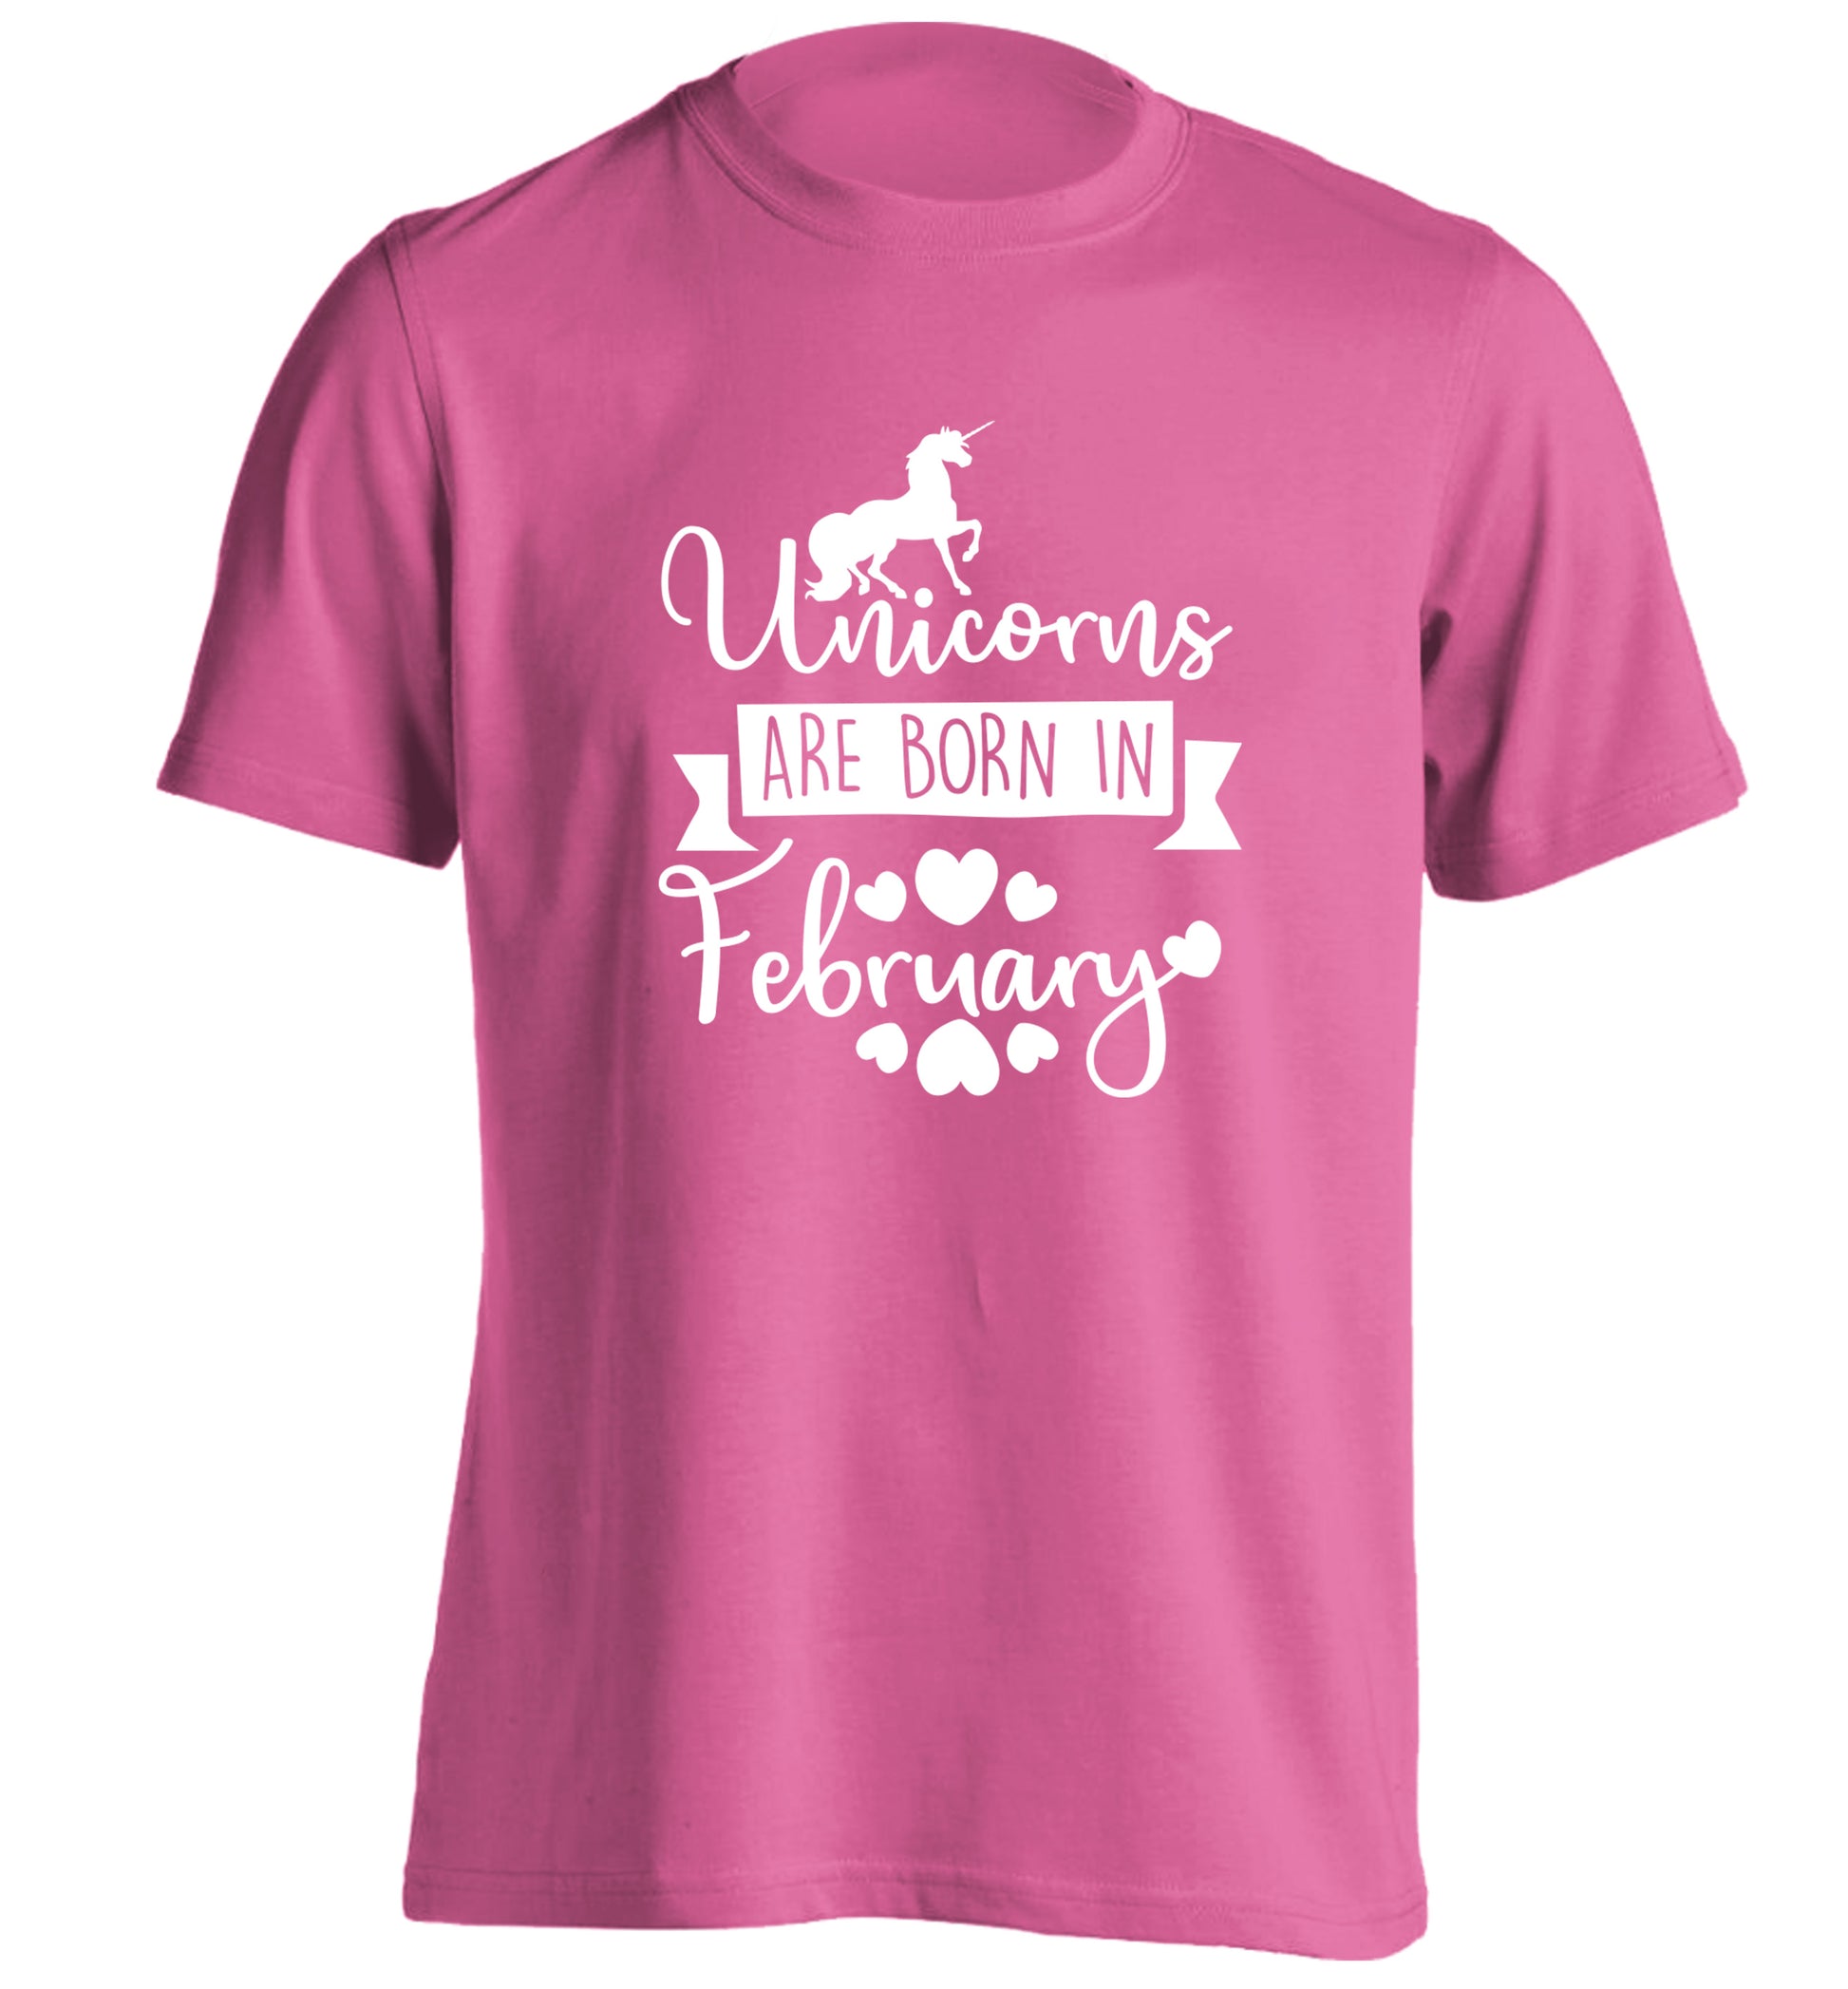 Unicorns are born in February adults unisex pink Tshirt 2XL